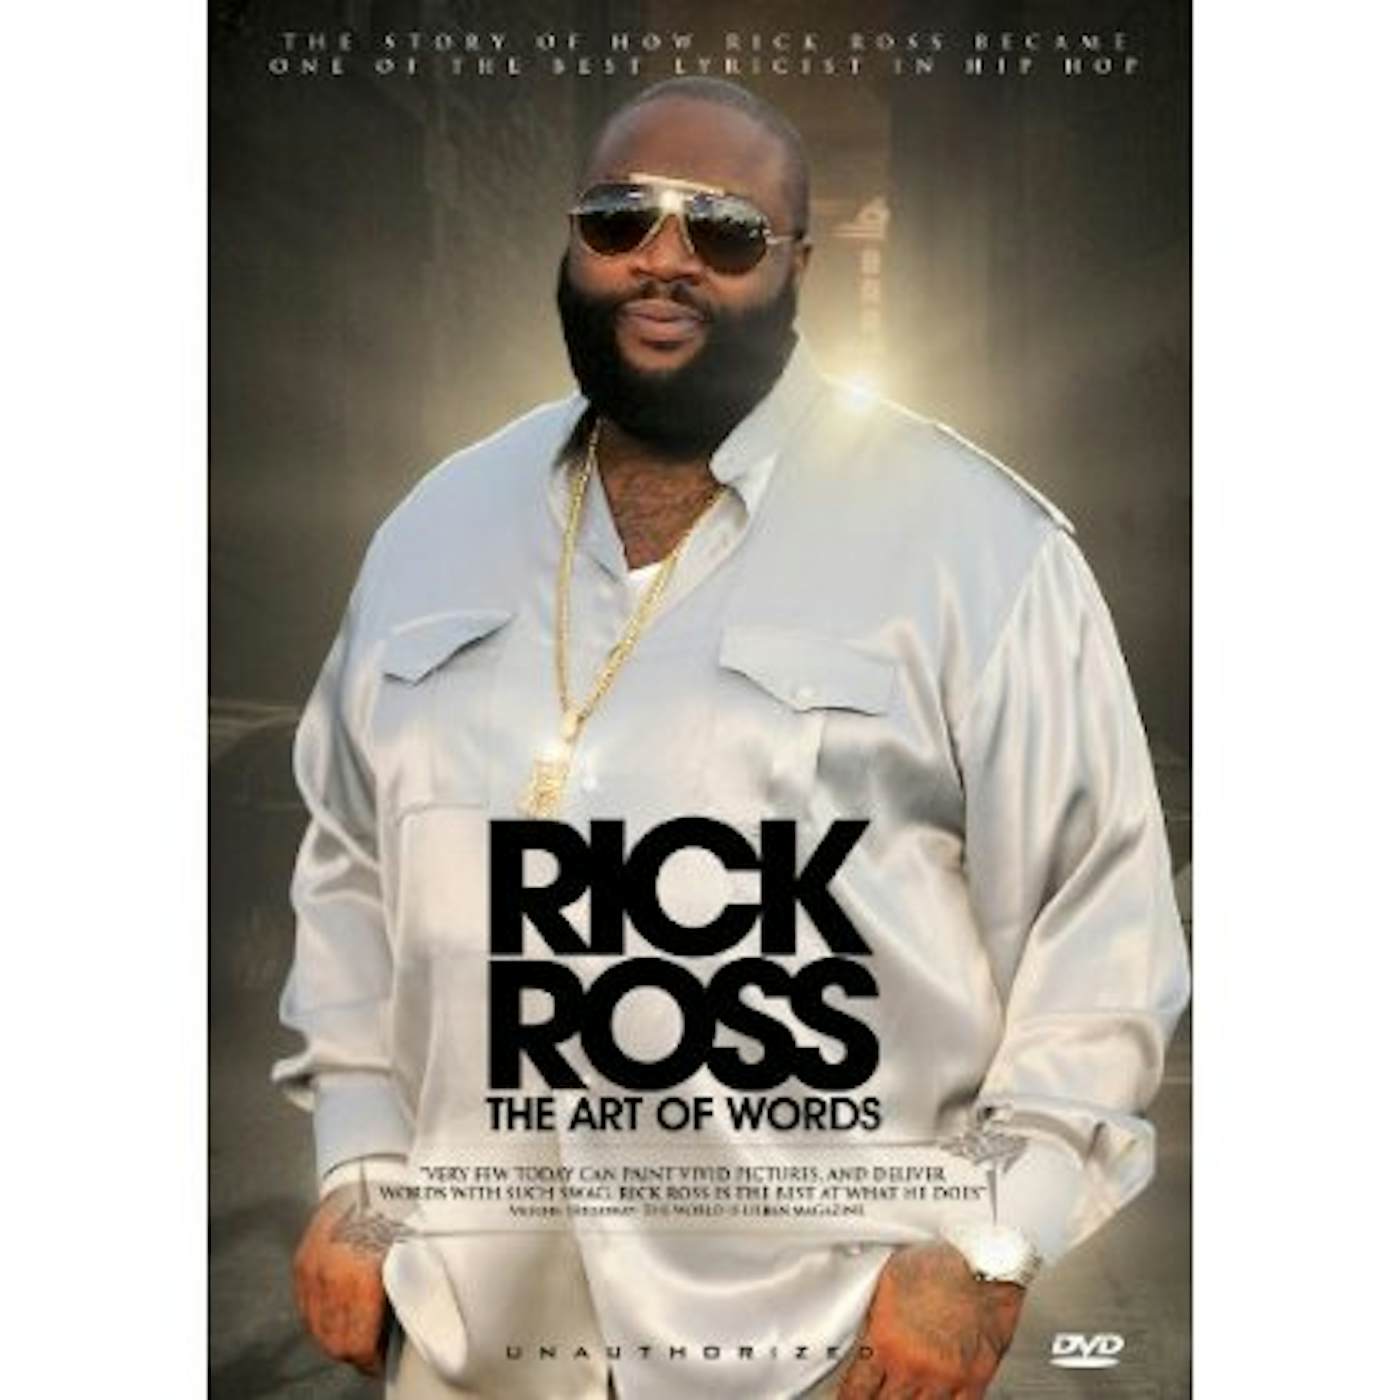 Rick Ross ART OF WORDS DVD